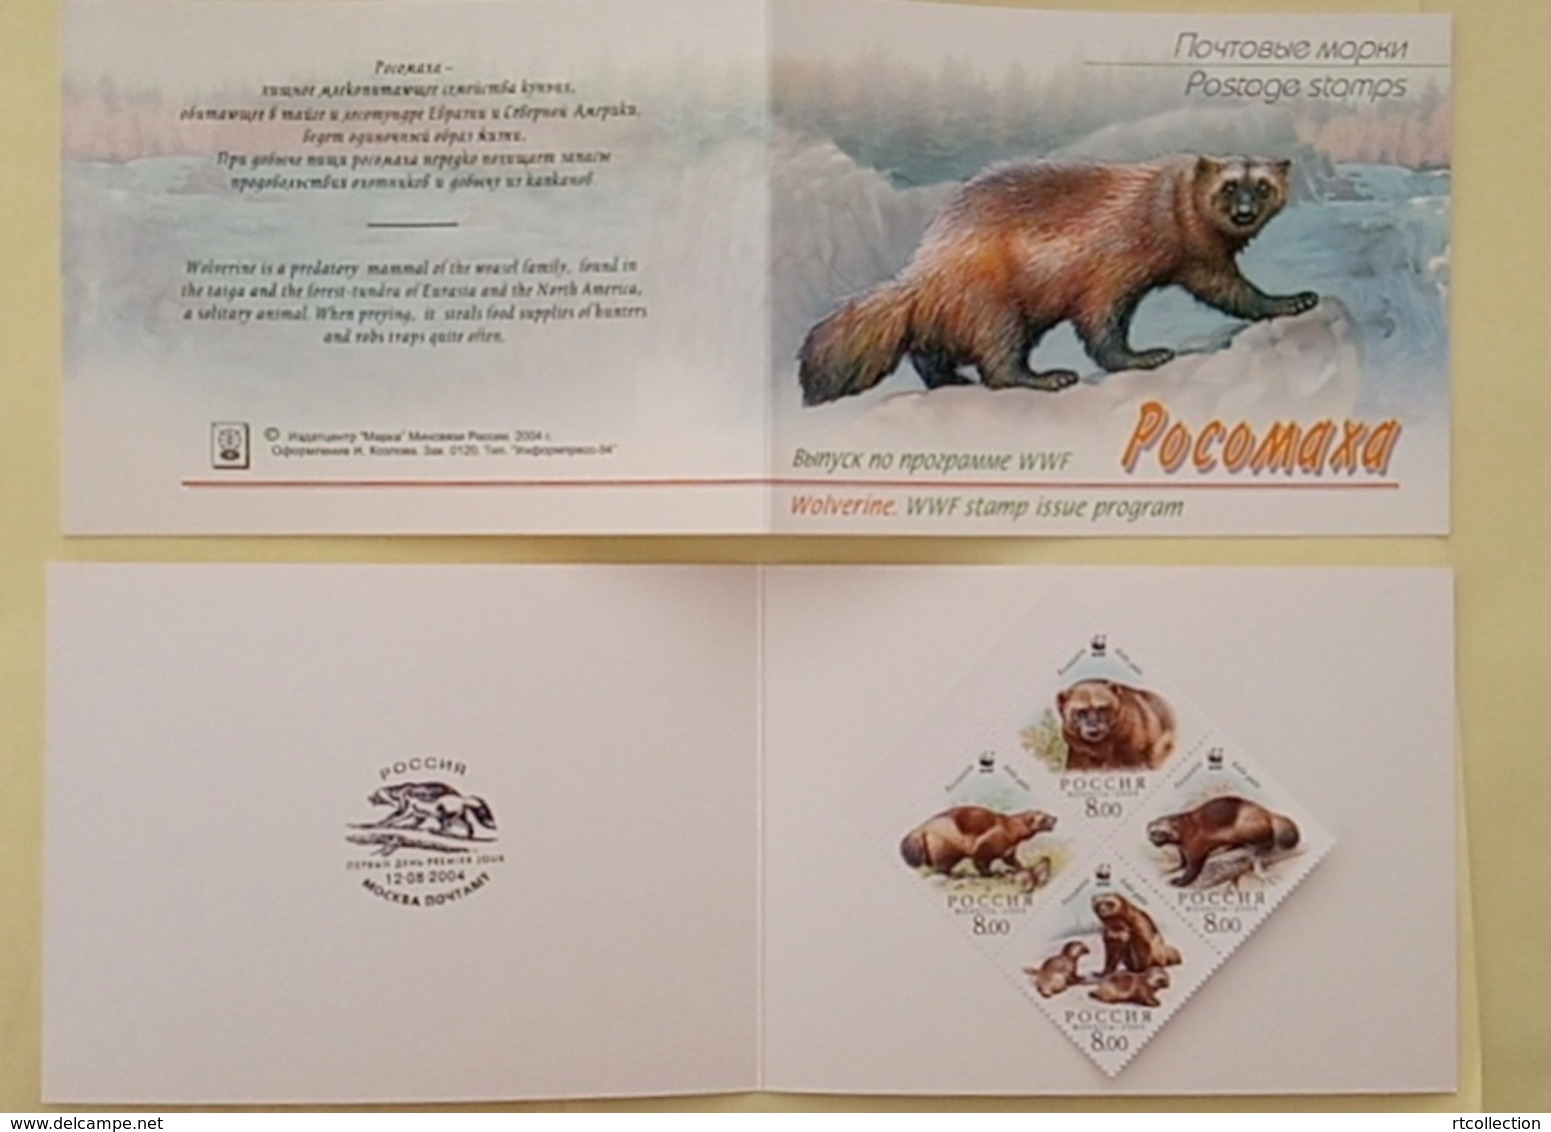 Russia 2004 Booklet WWF W.W.F. Wolverine Bear Animals Mammals Bears World Wildlife Fund Organizations Stamps MNH - Colecciones & Series